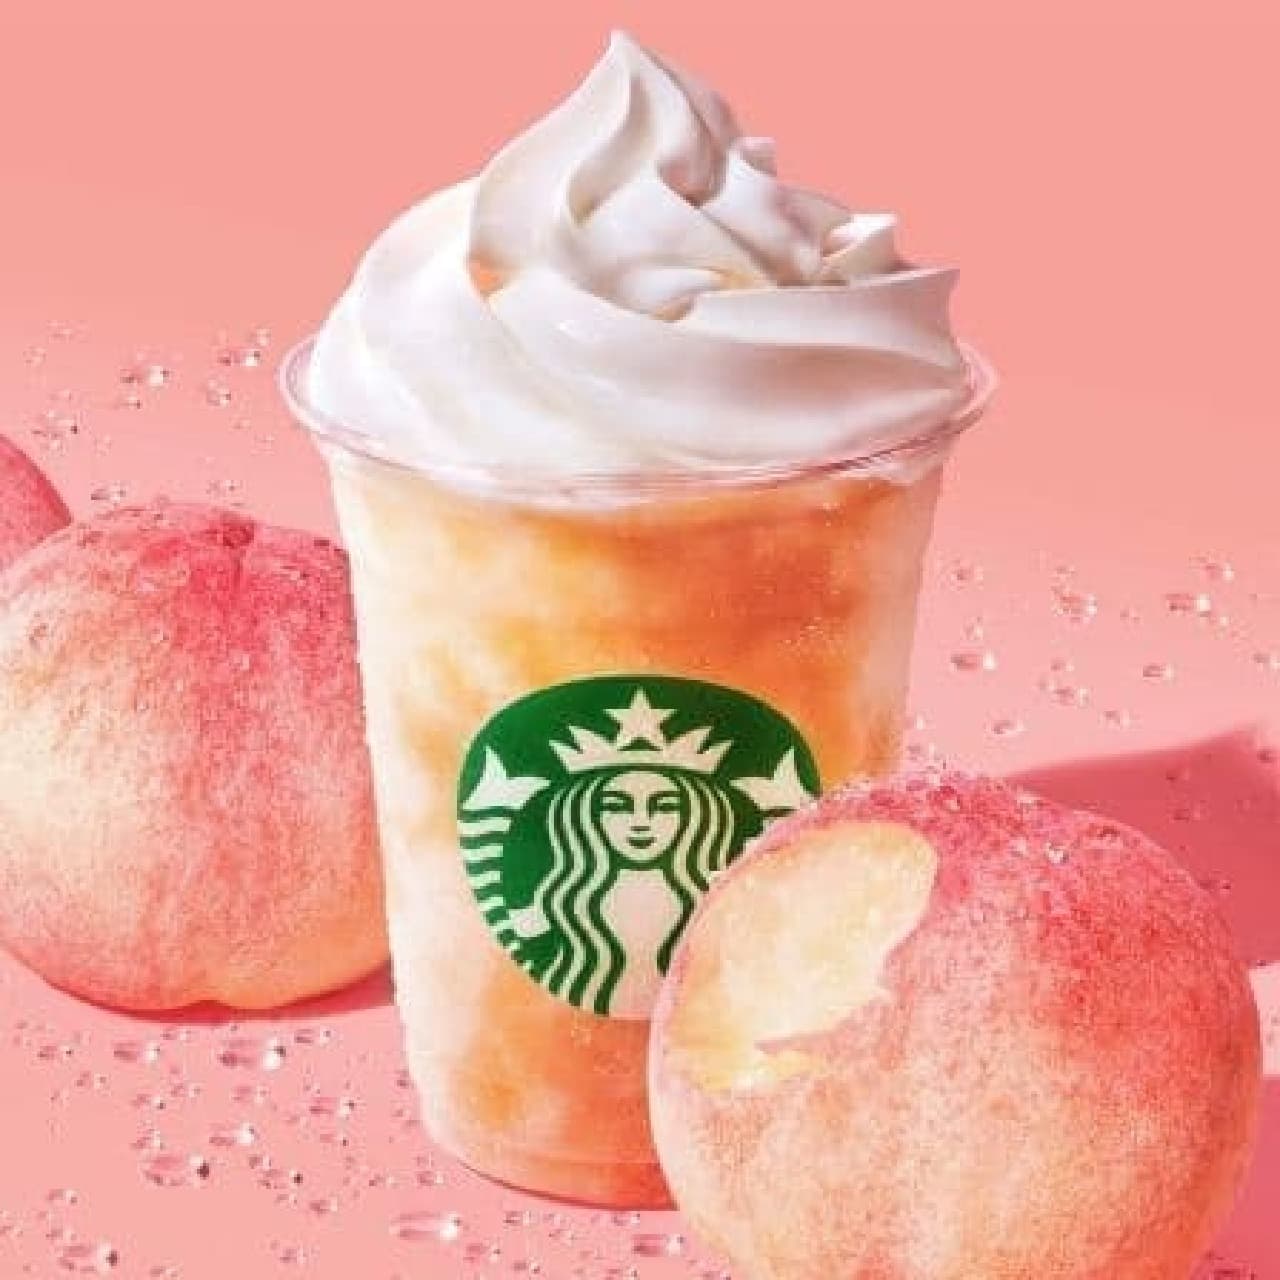 Starbucks "Juicy Peach Frappuccino"